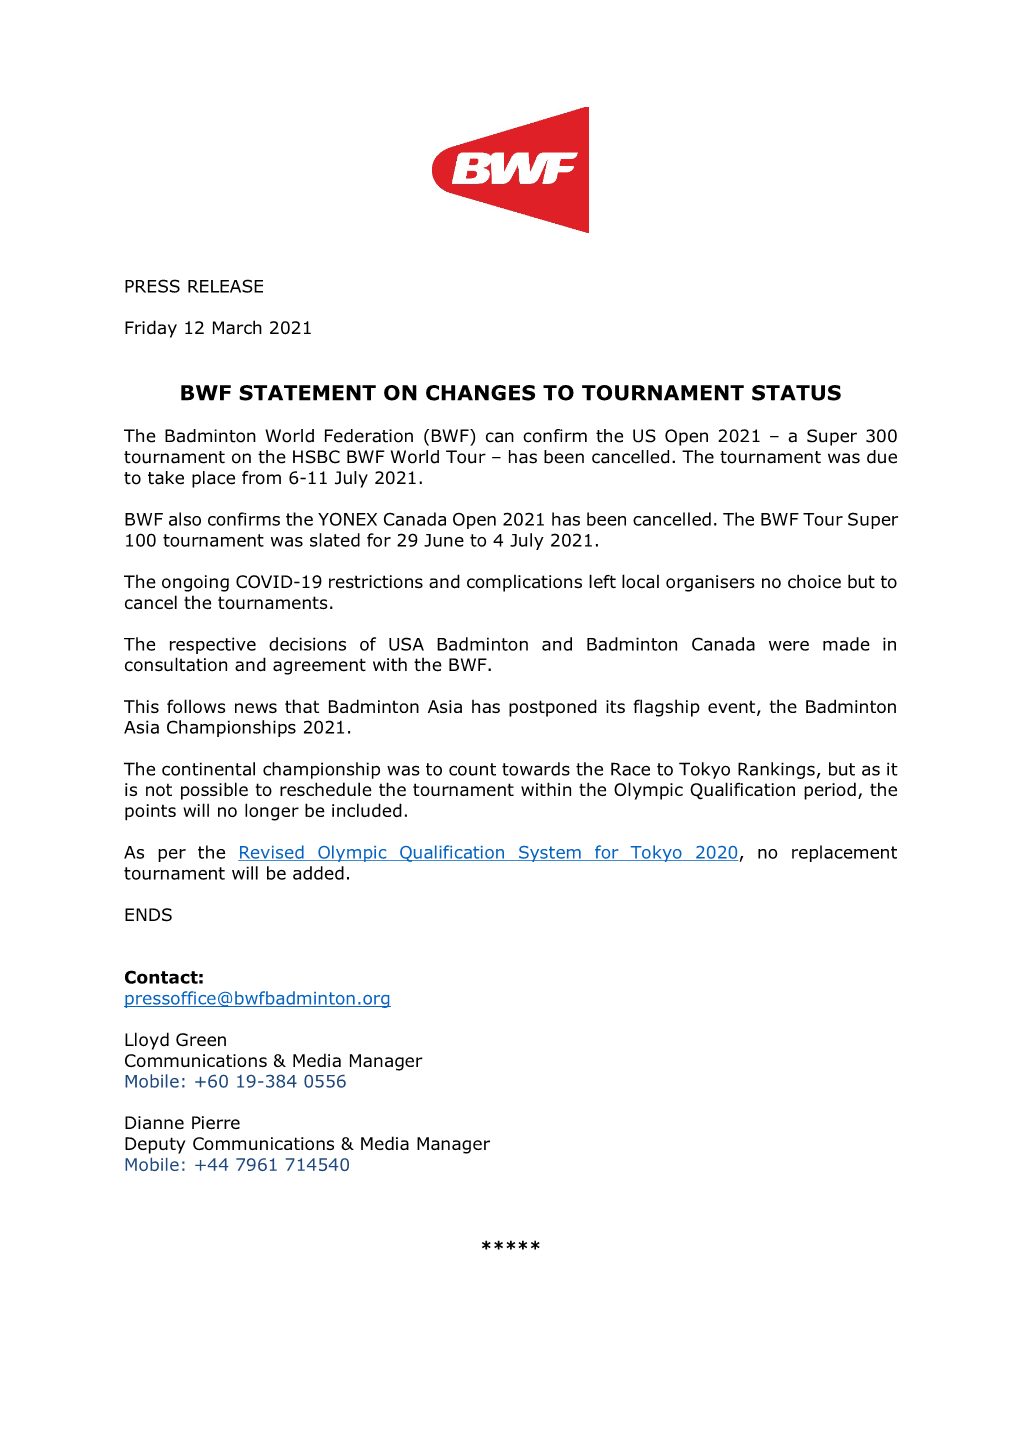 Bwf Statement on Changes to Tournament Status